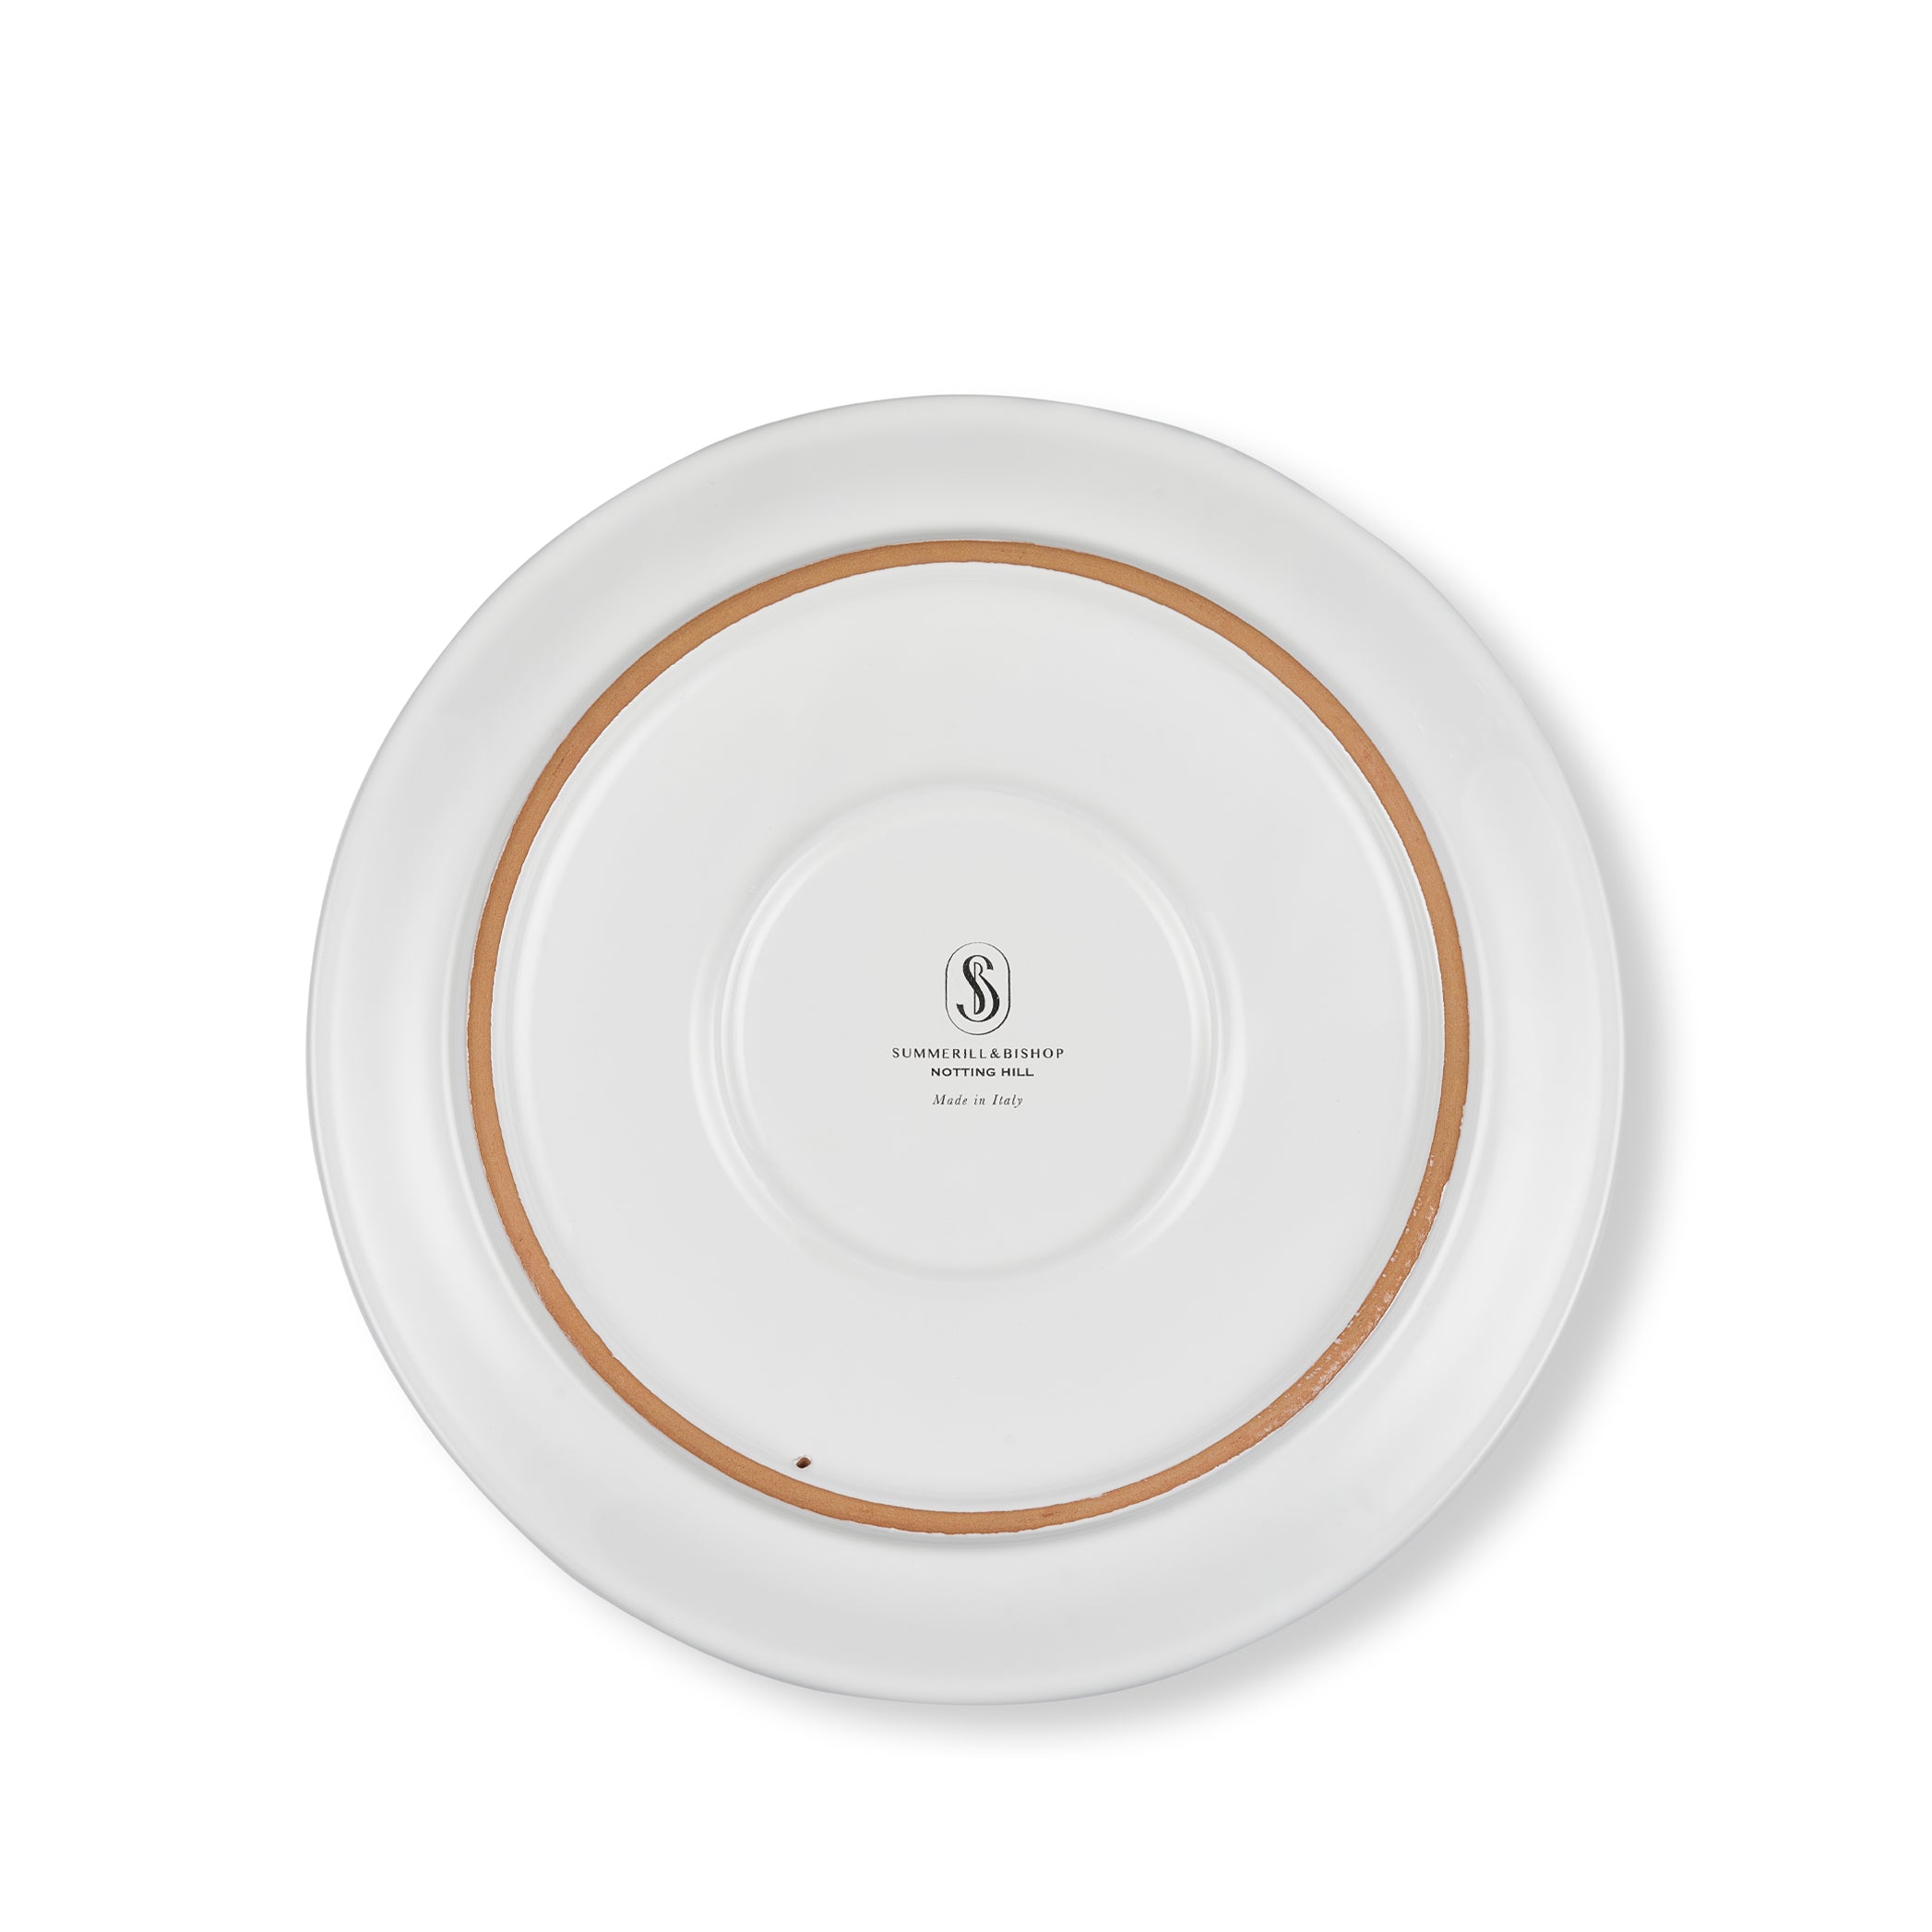 S&B 'Brushed' Ceramic Dinner Plate in Season Green, 30cm